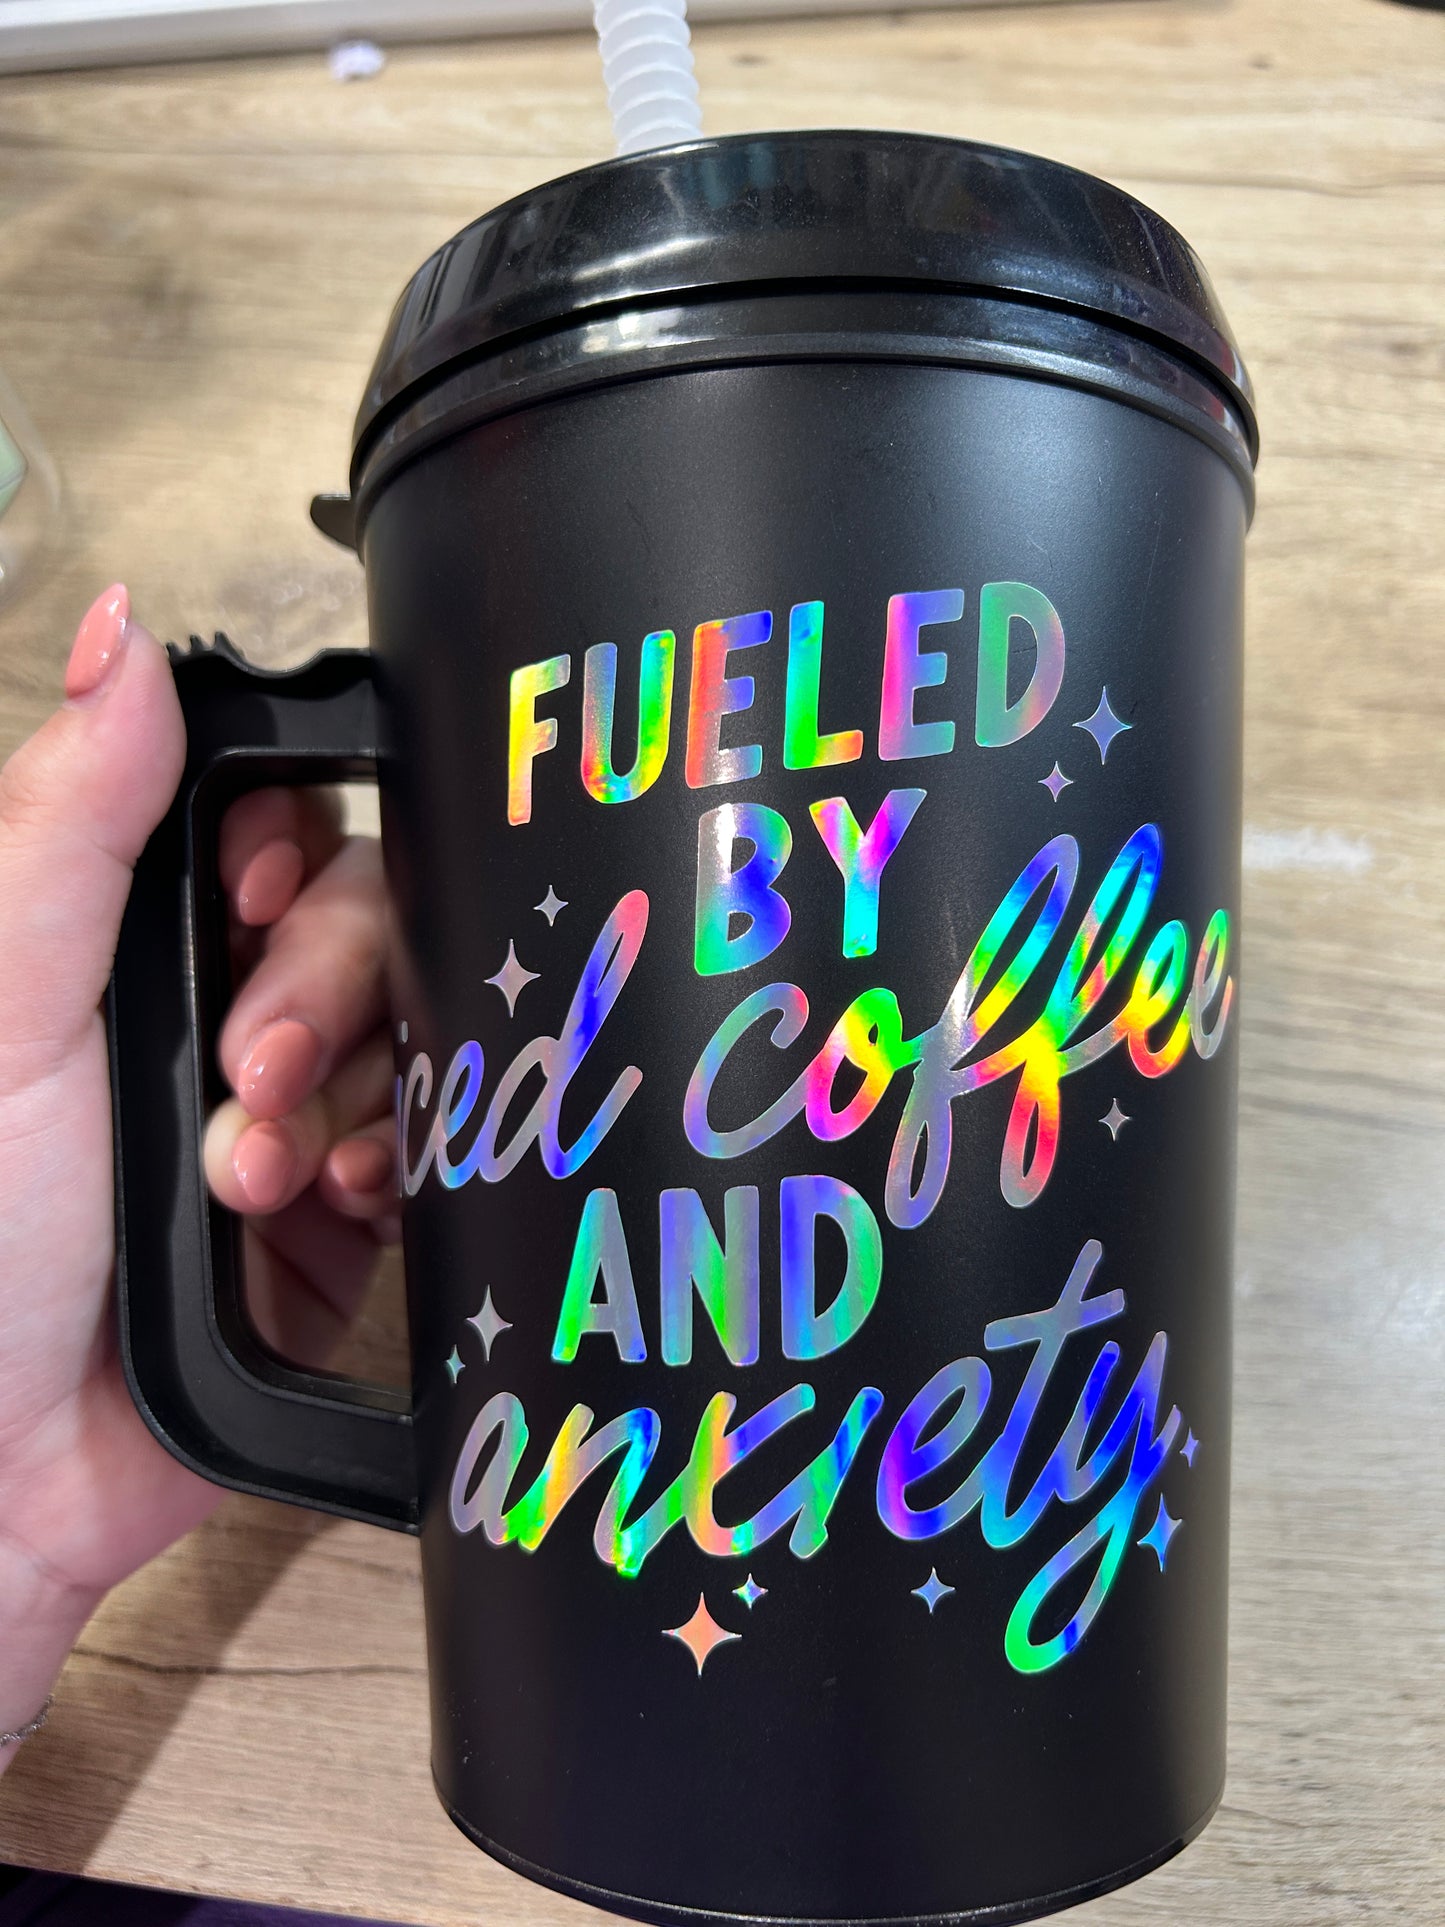 Fueled by Ice Coffee & Anxiety (holographic) 34oz Mega Mug